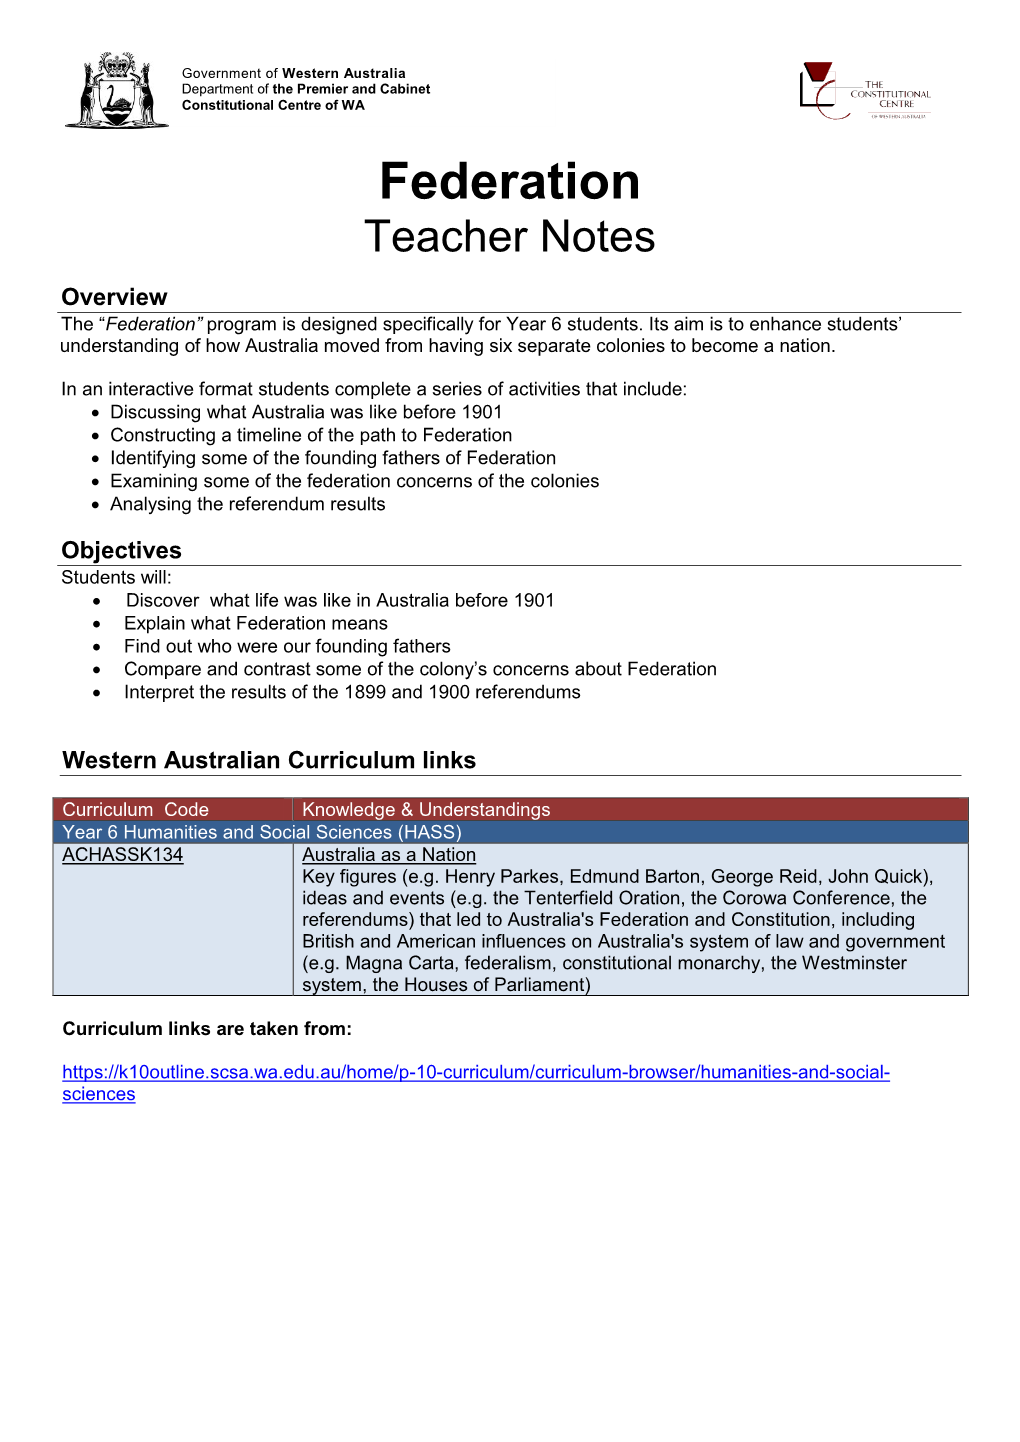 Federation Teacher Notes